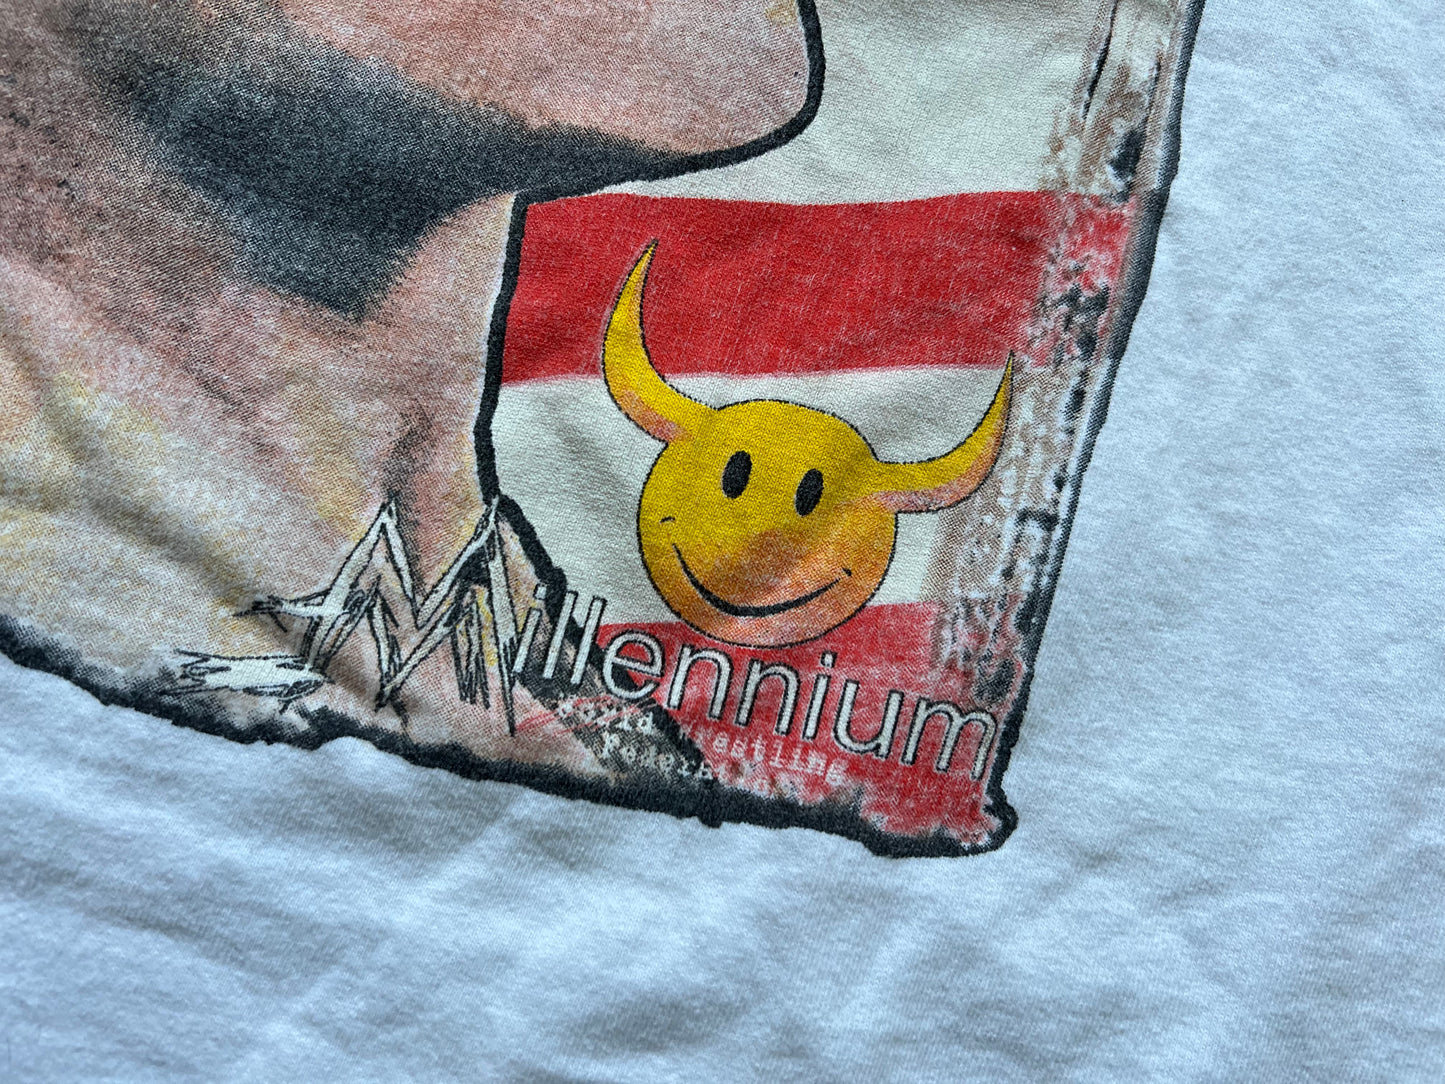 1999 WWF The Rock “Millennium” shirt